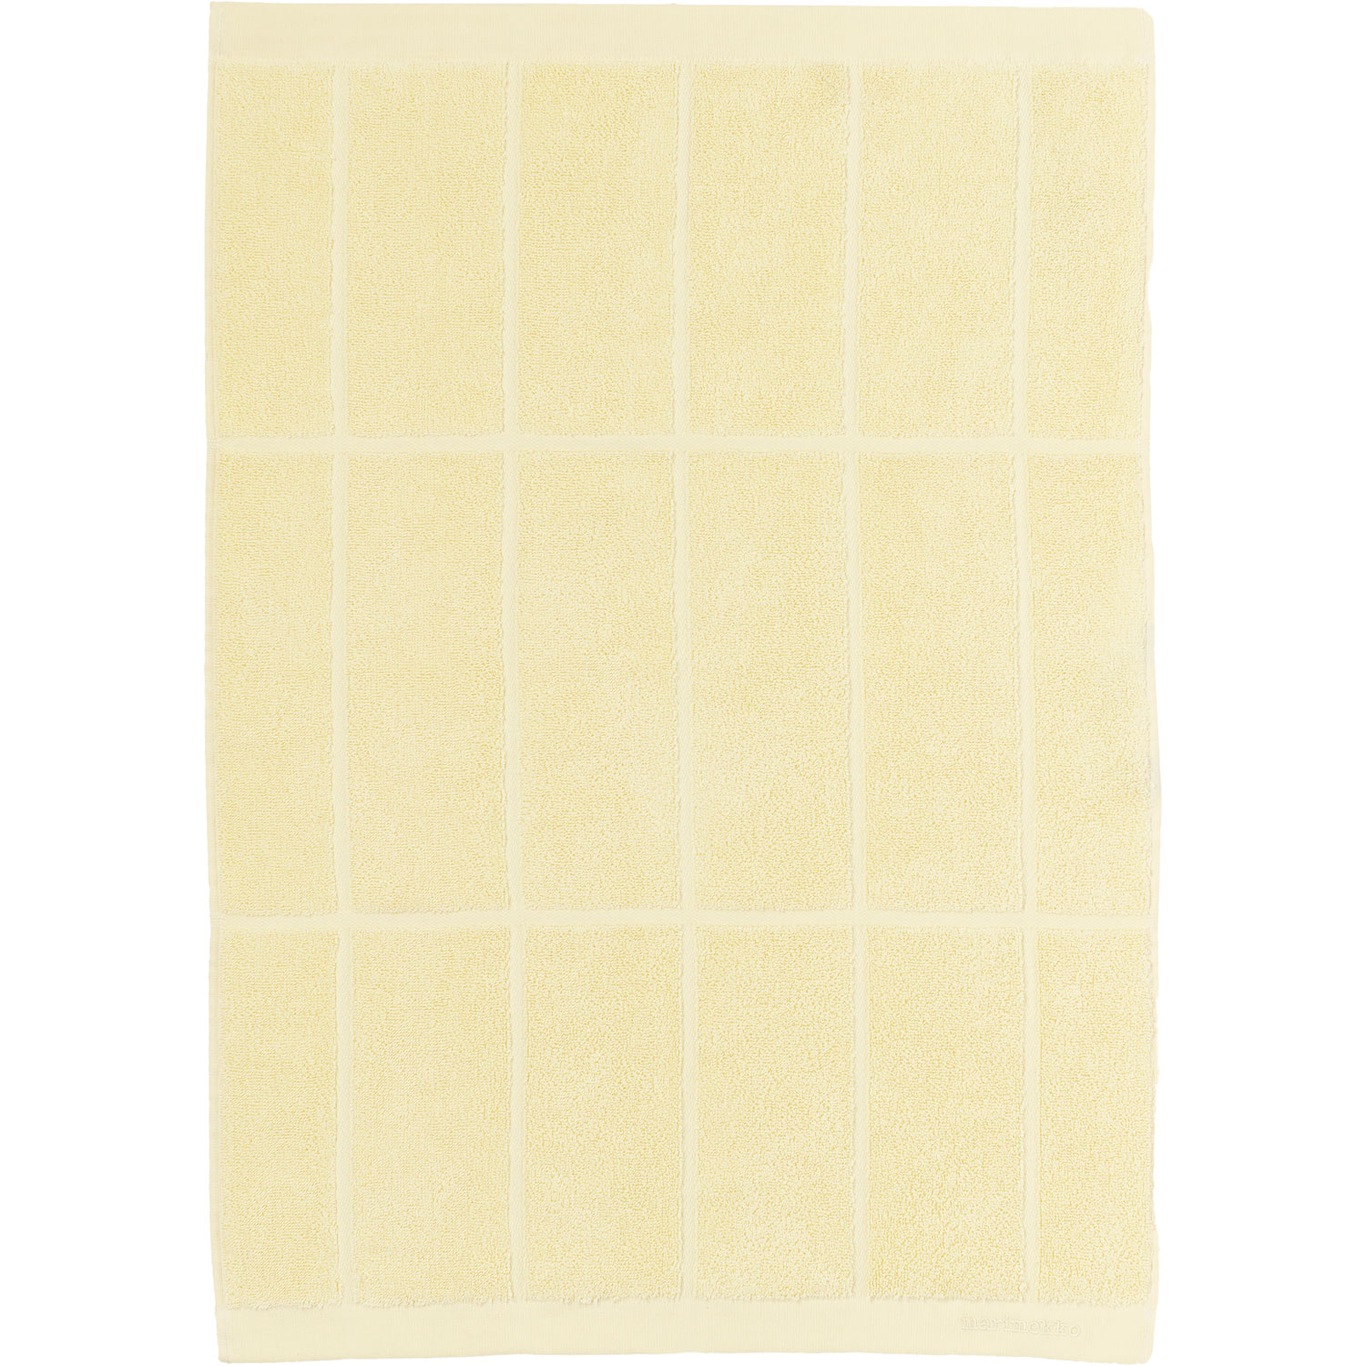 Tiiliskivi Håndklæde 50x70 cm, Butter Yellow